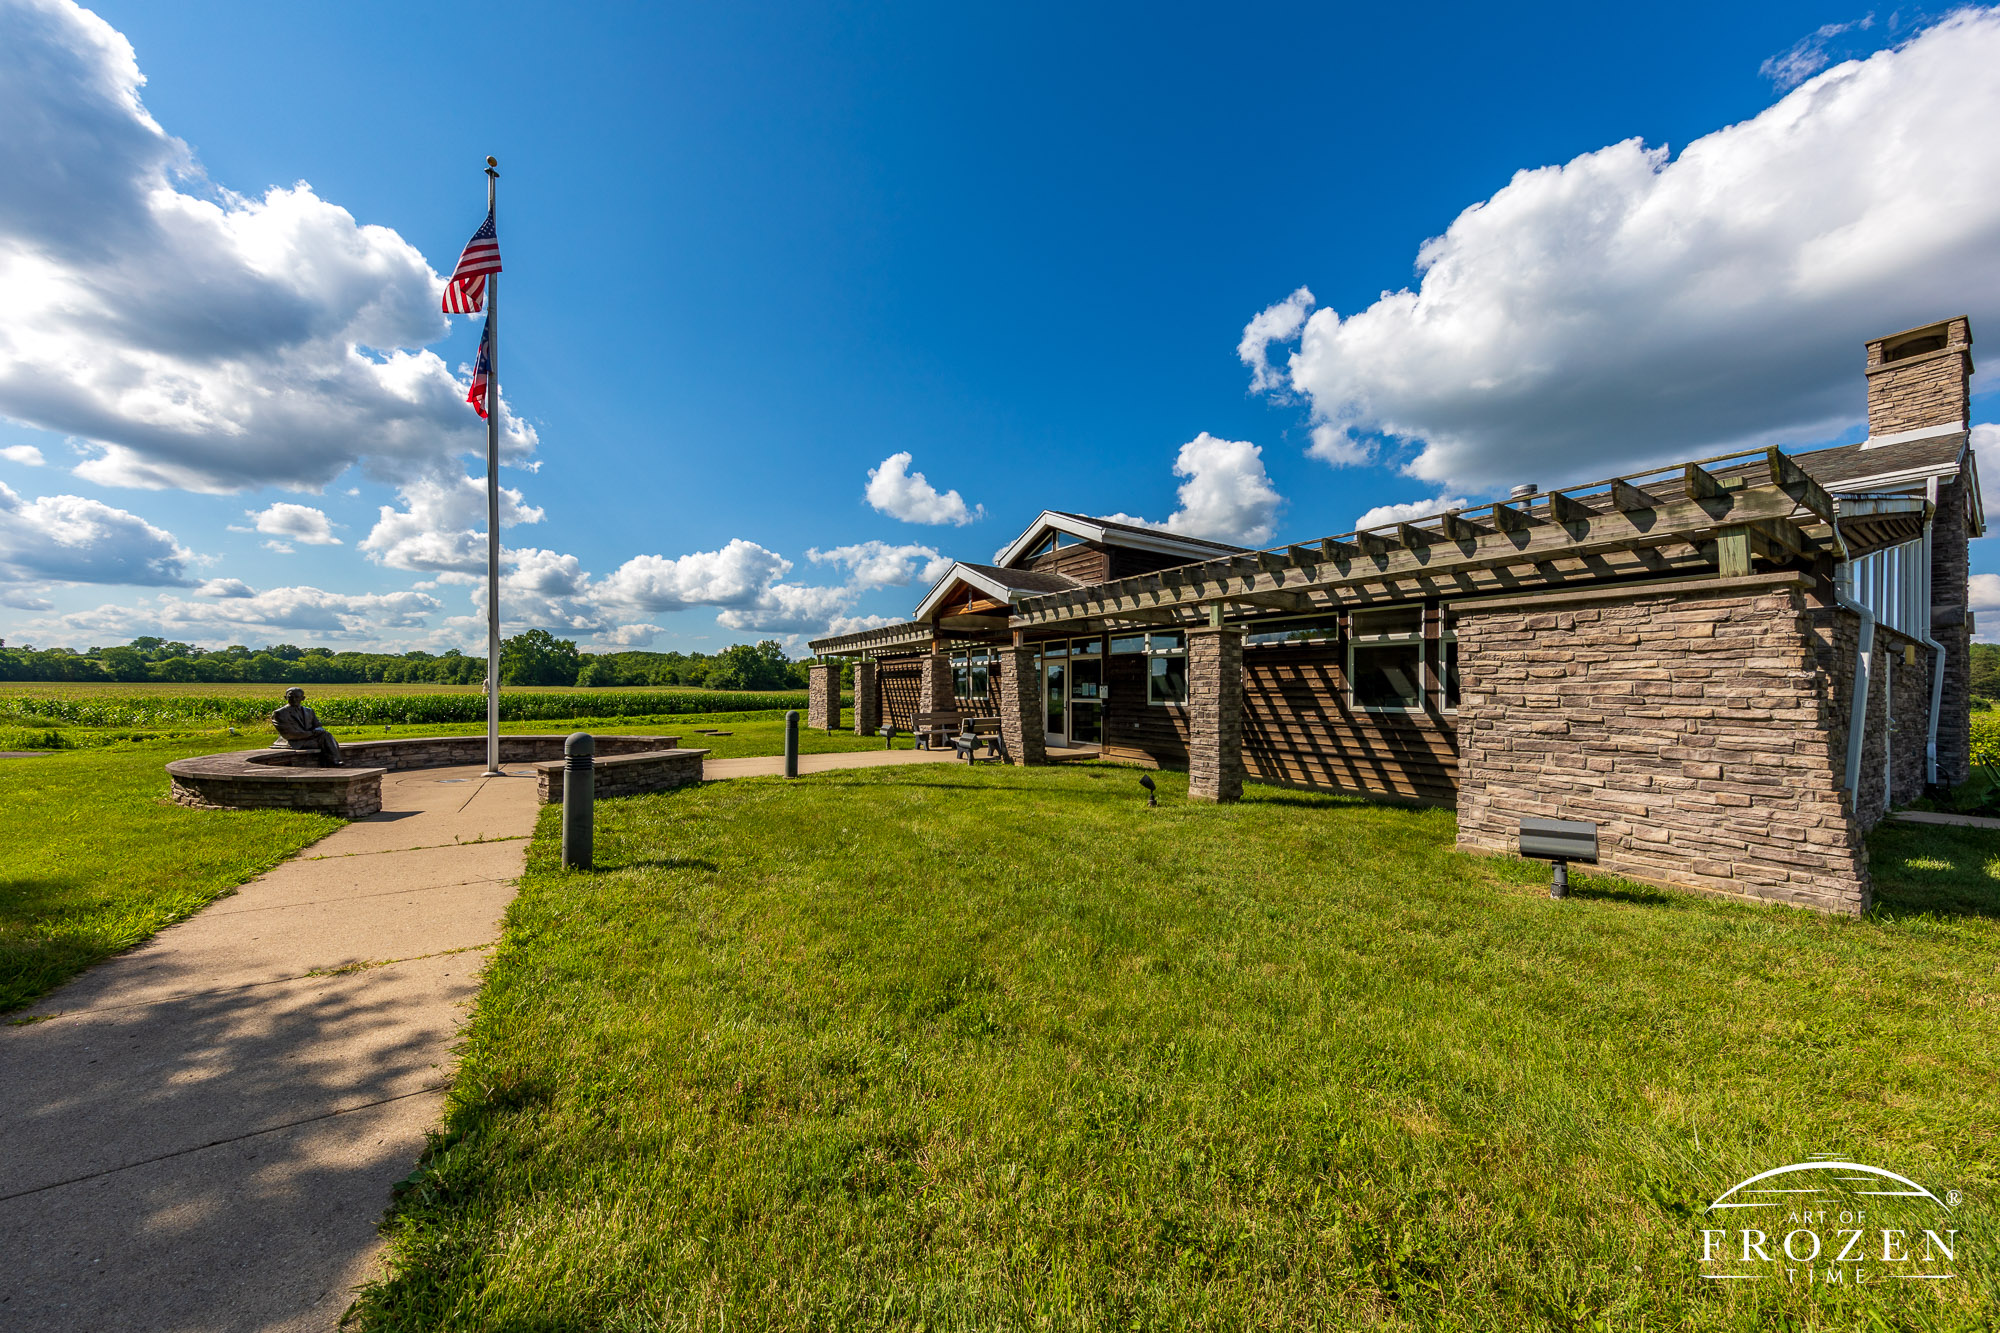 An exterior view of the Davidson Interpretive Center built adjacent to the Battle of Peckuwe battle site